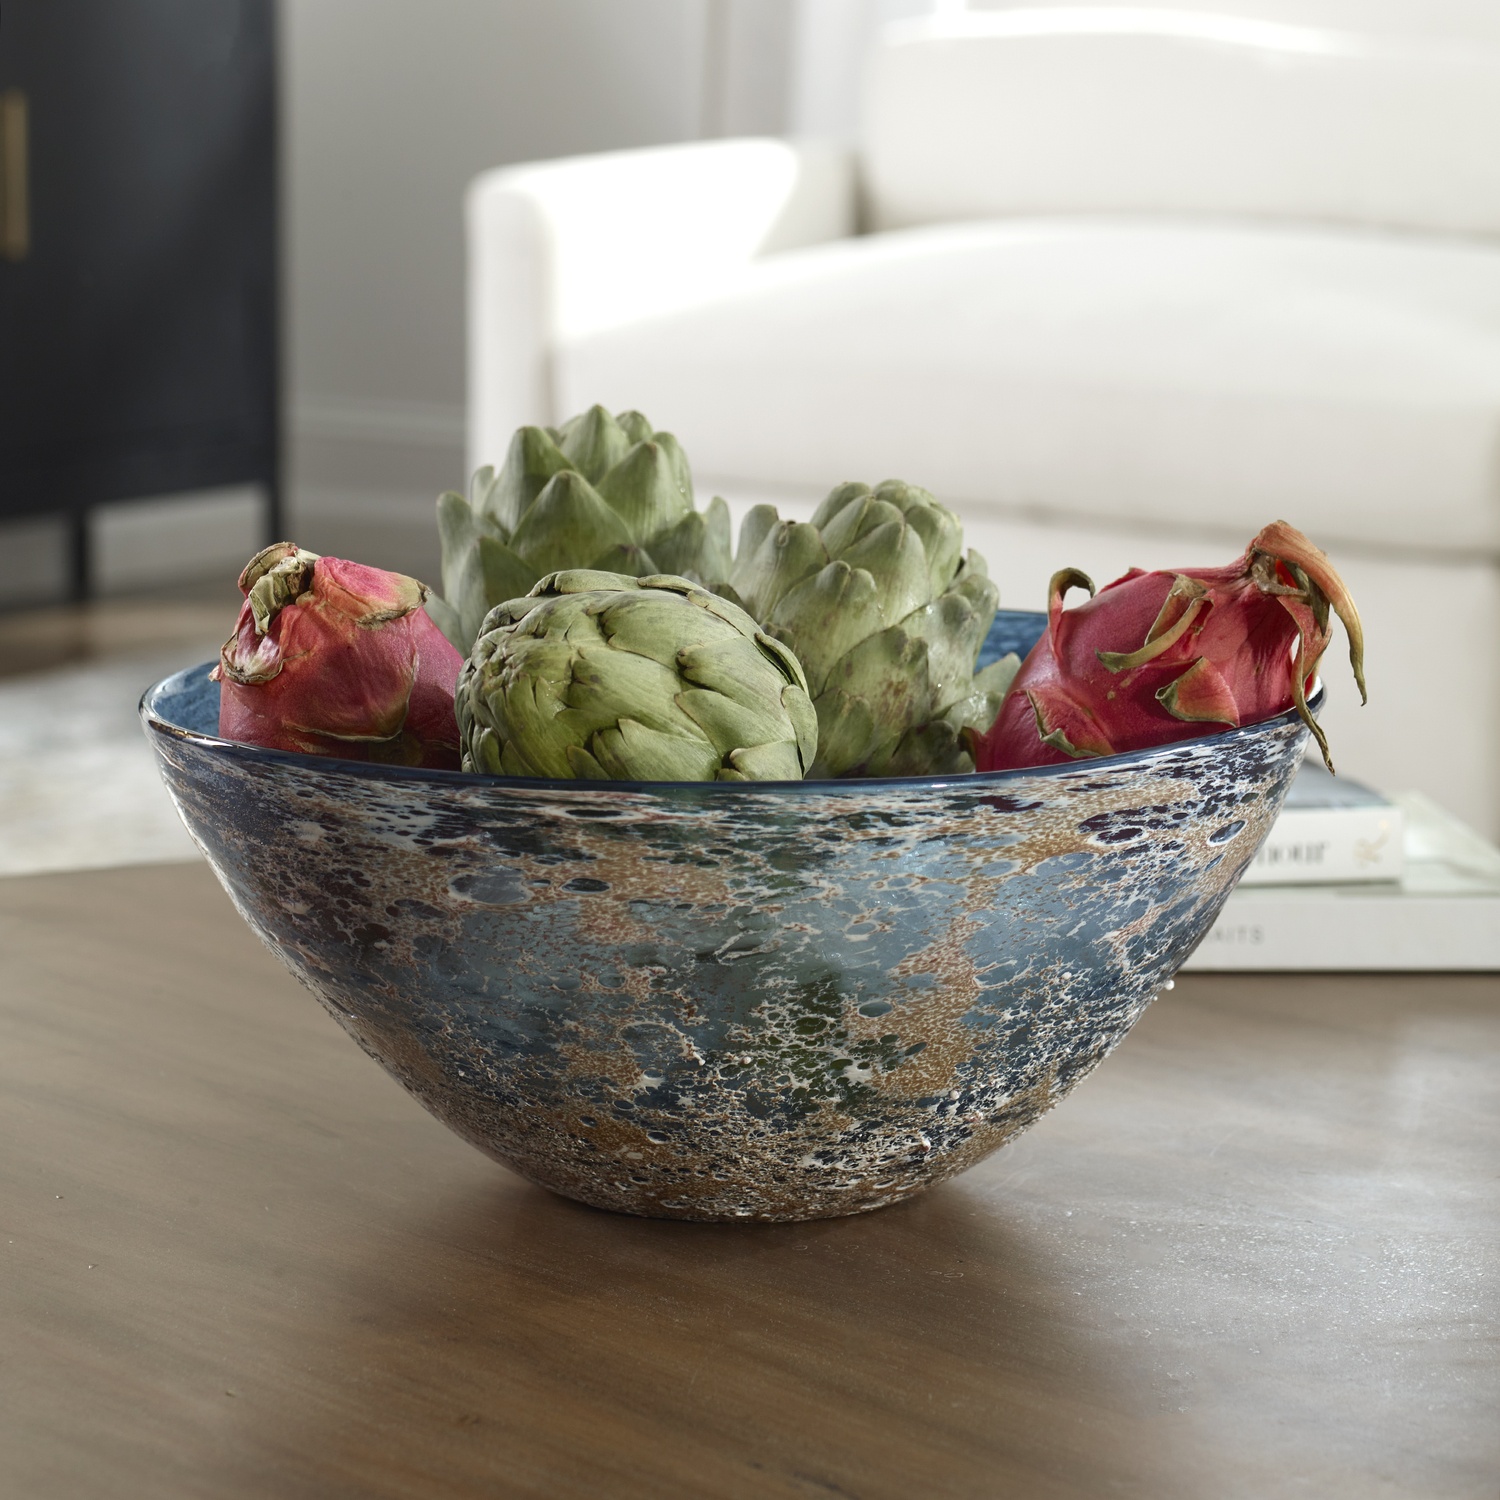 Genovesa-Decorative Bowls & Trays